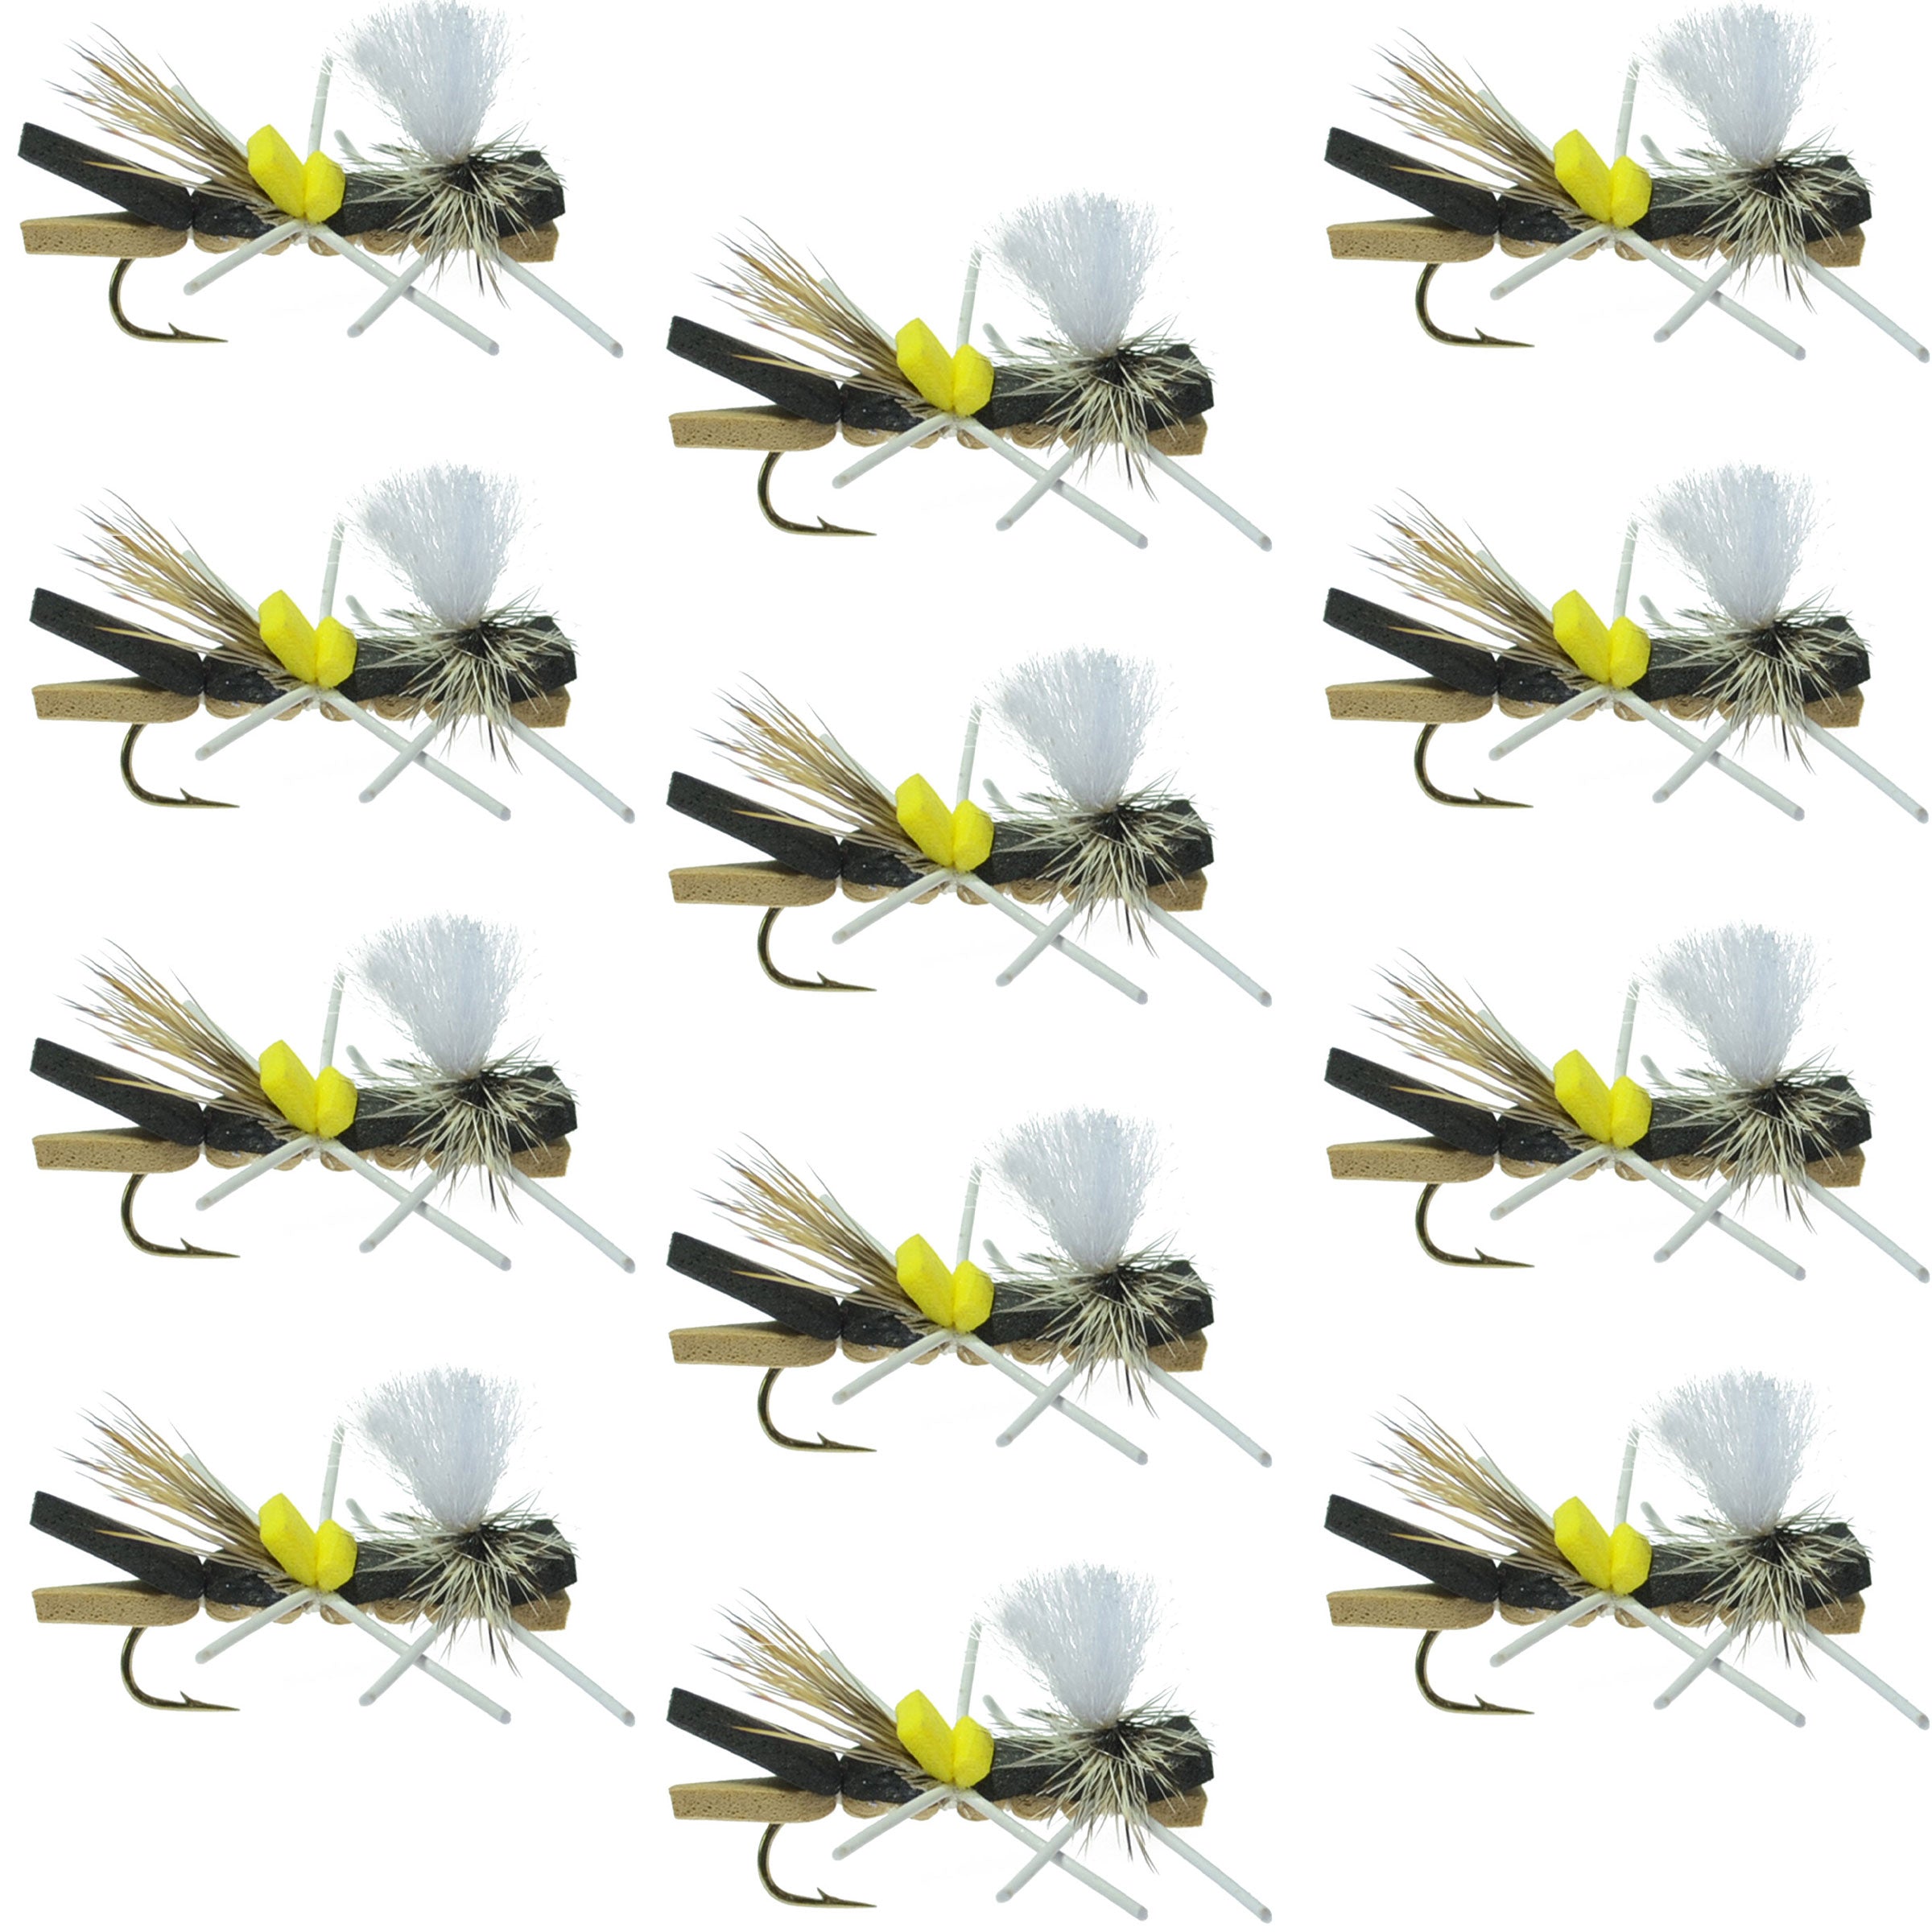 Parachute Chernobyl Ant Black Tan Foam Body Grasshopper Fly 1 Dozen Flies Hook Size 10